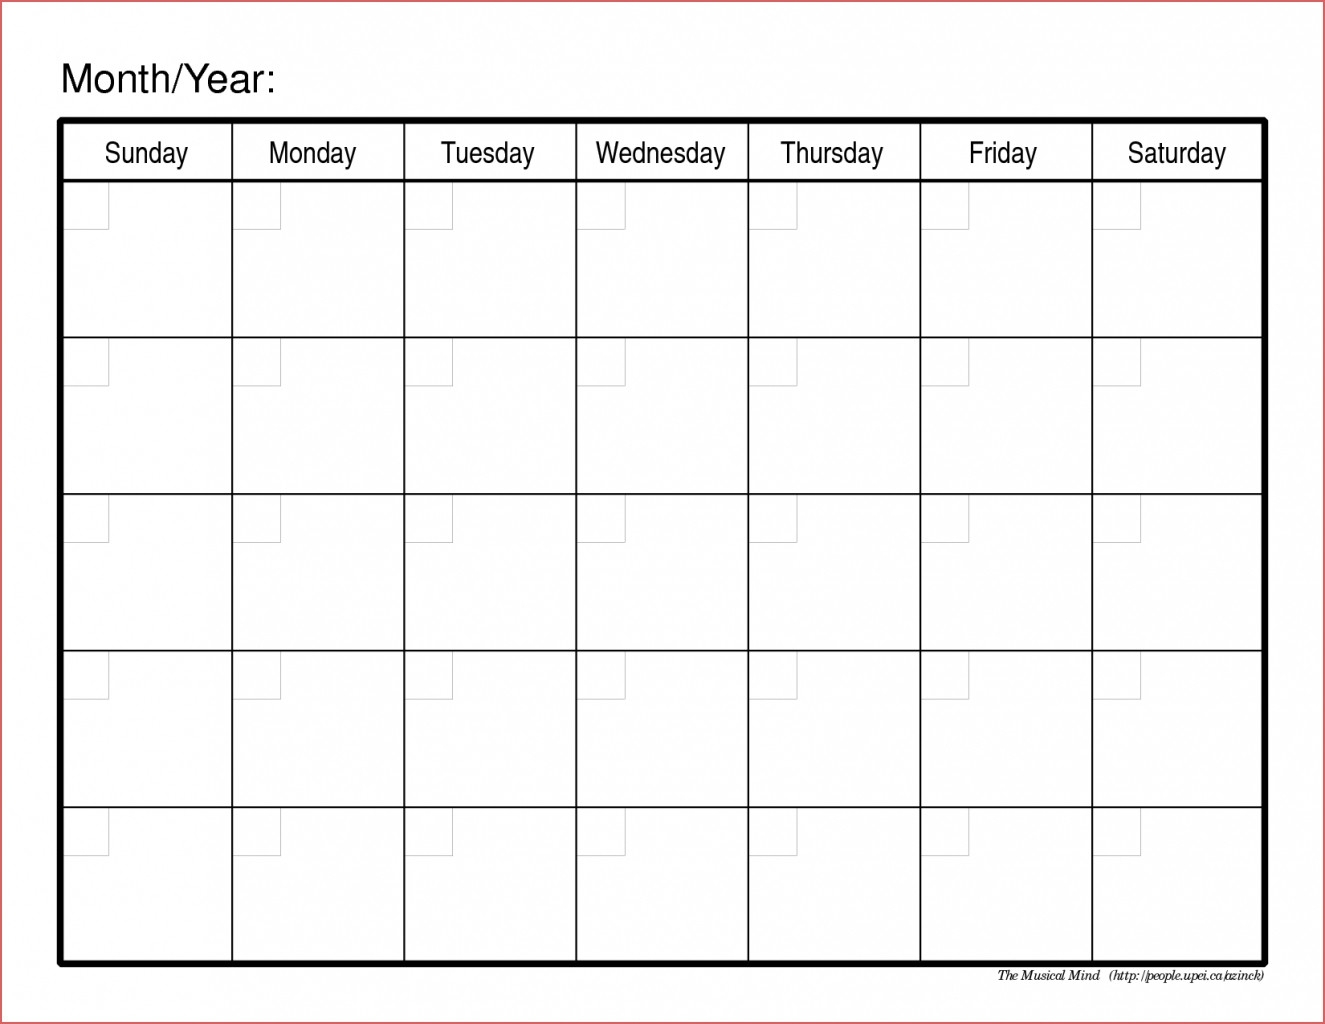 Online Calendar Planner Printable Calendar Month Printable Free intended for Printable Monthly Calendar Planner Template